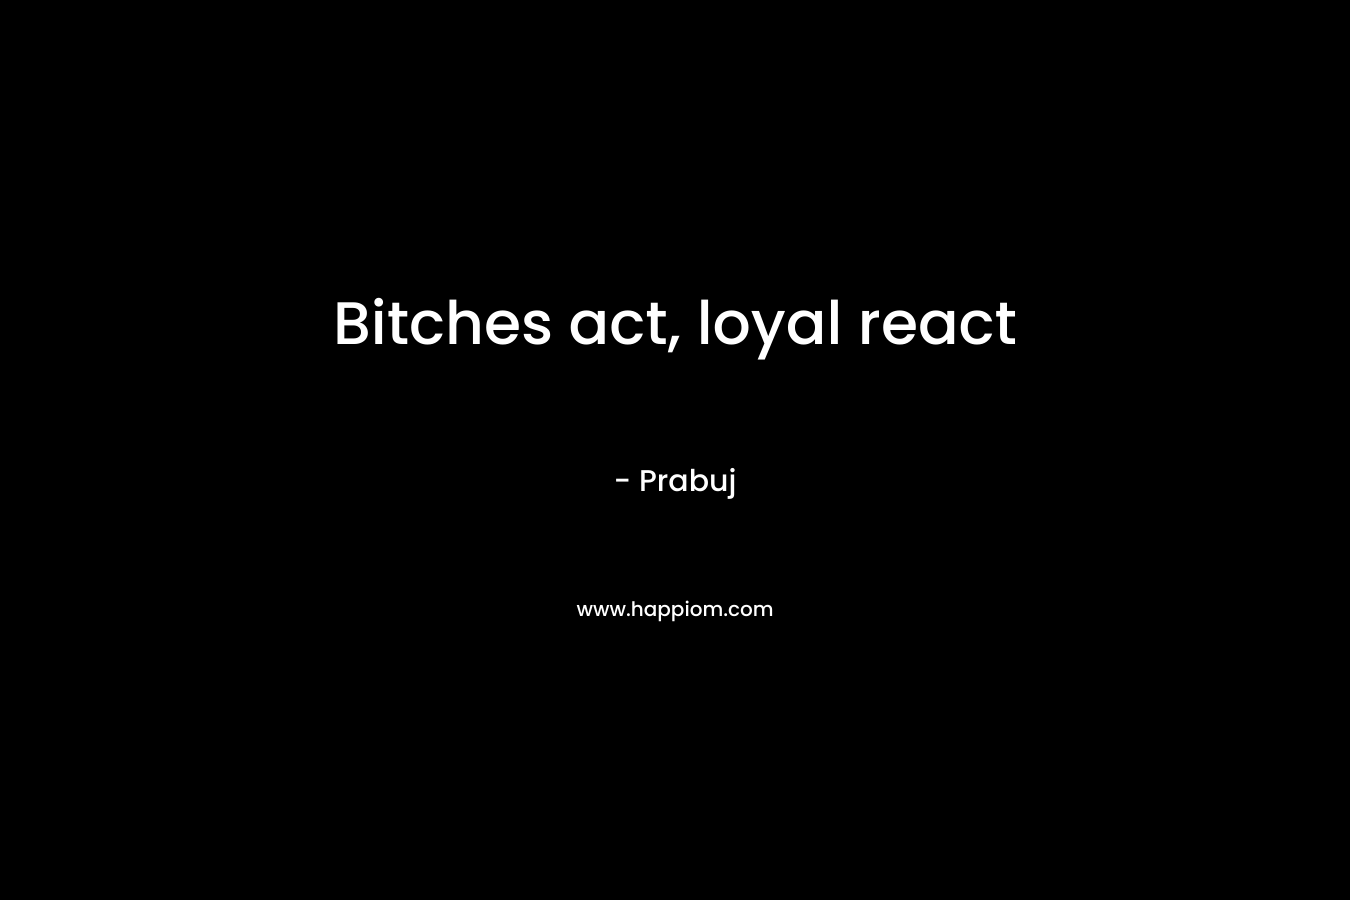 Bitches act, loyal react